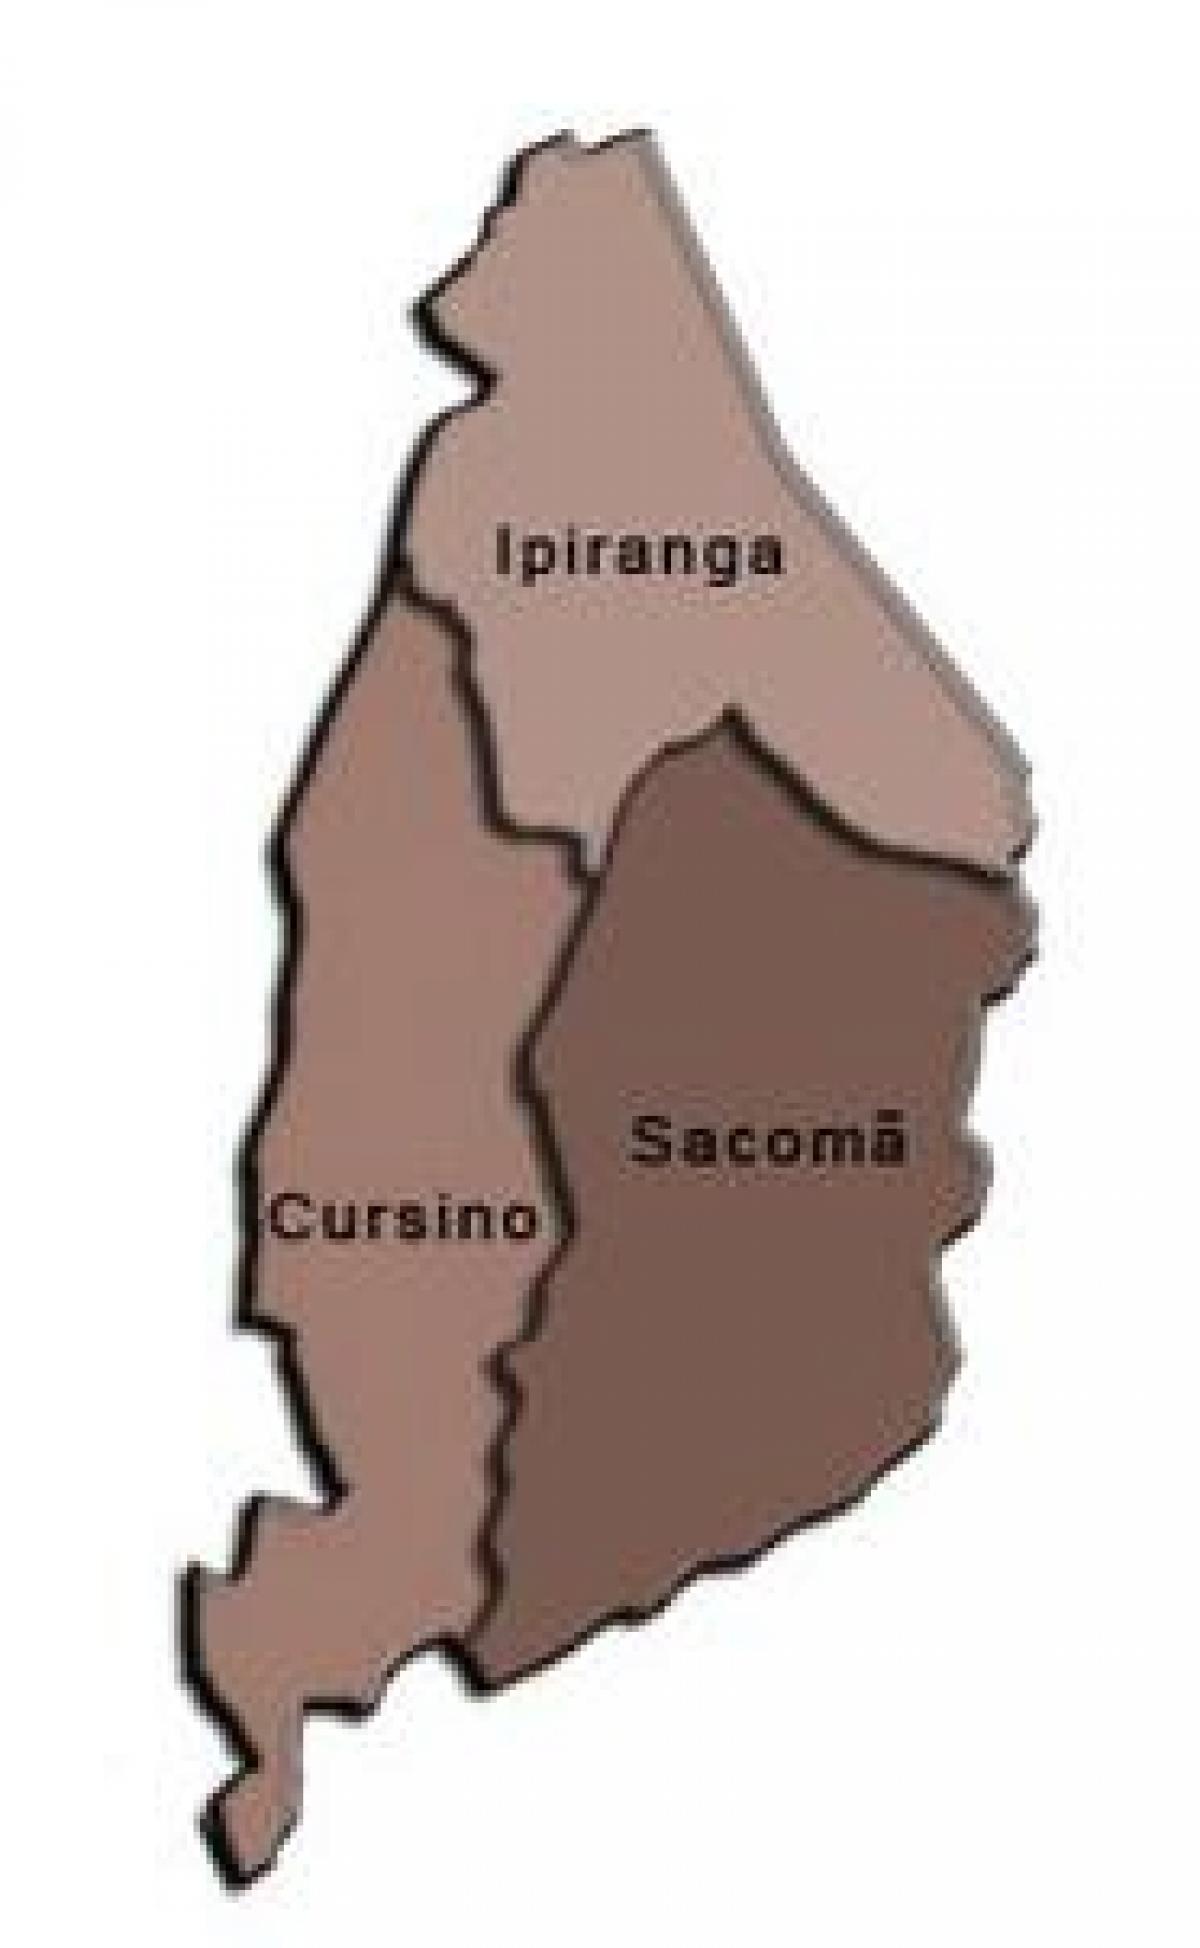 Kart супрефектур Ипиранга